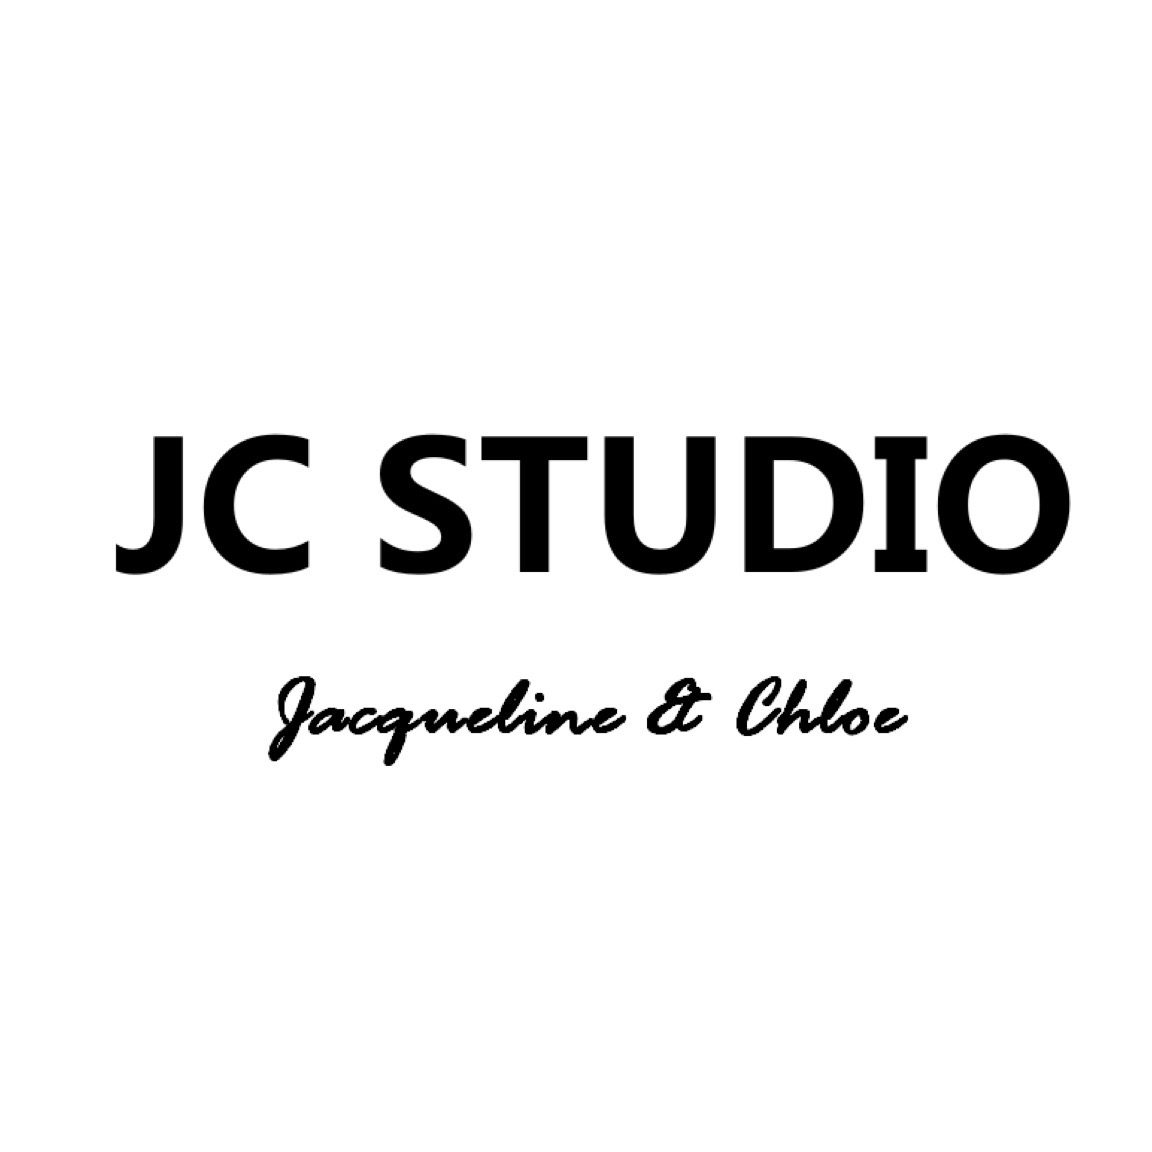 JC STUDIO